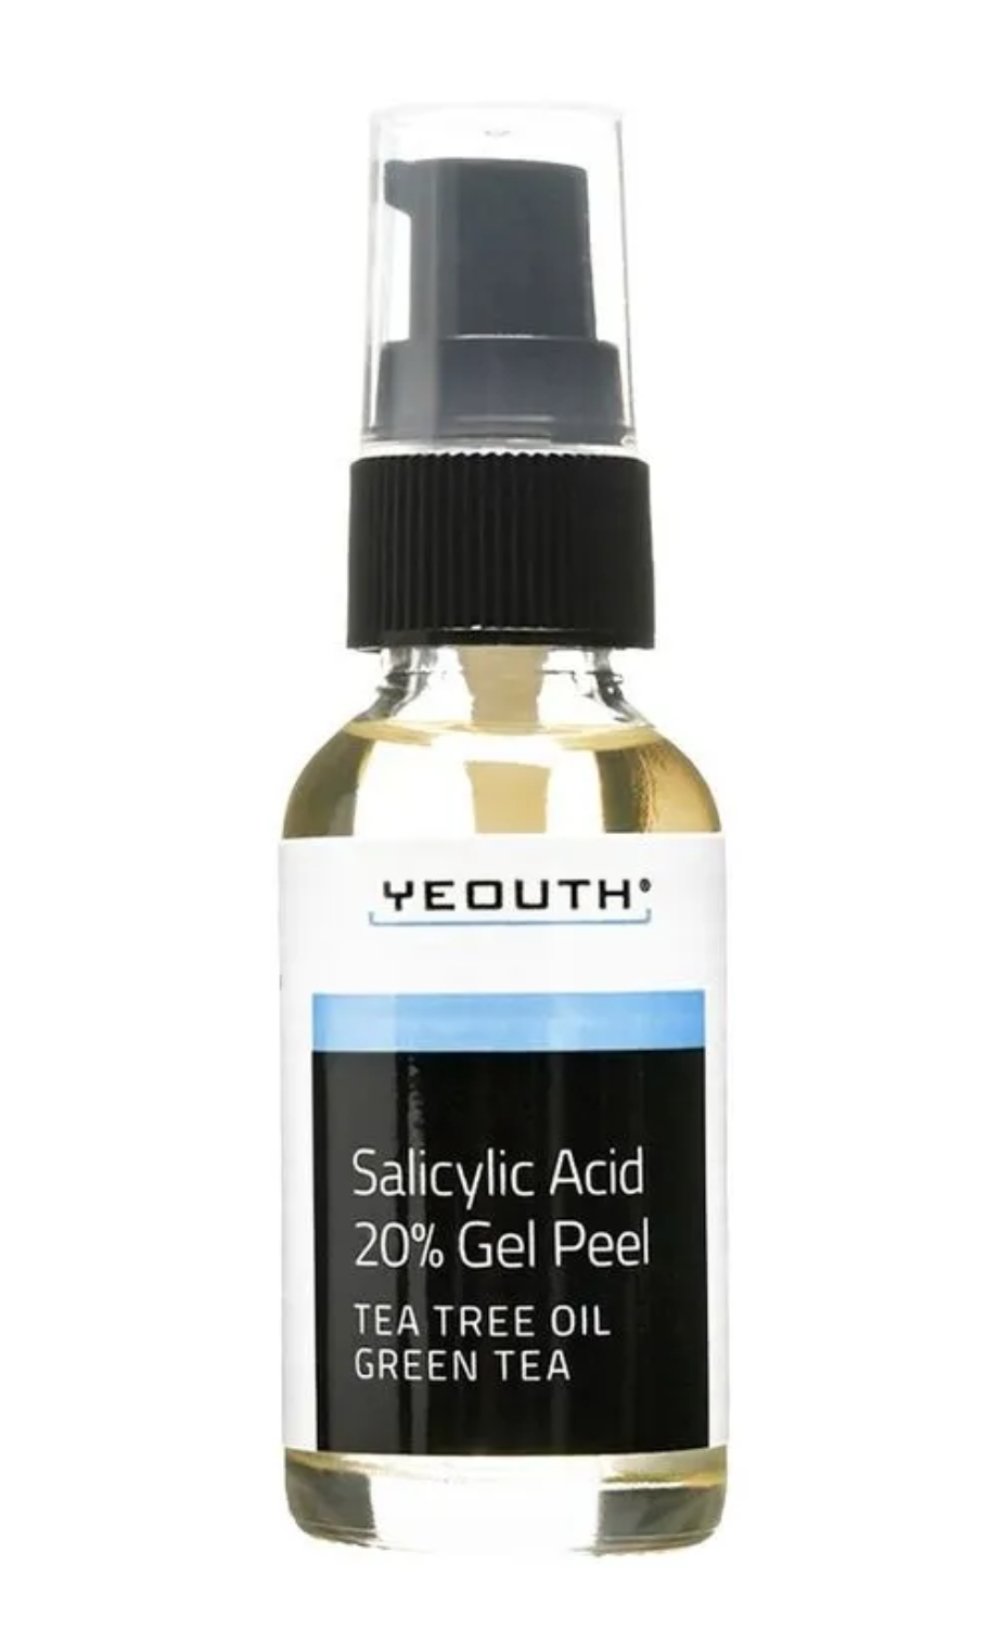 YEOUTH - 20% Salicylic Acid Face Gel Peel (1 fl oz) 30ml - The Face Method